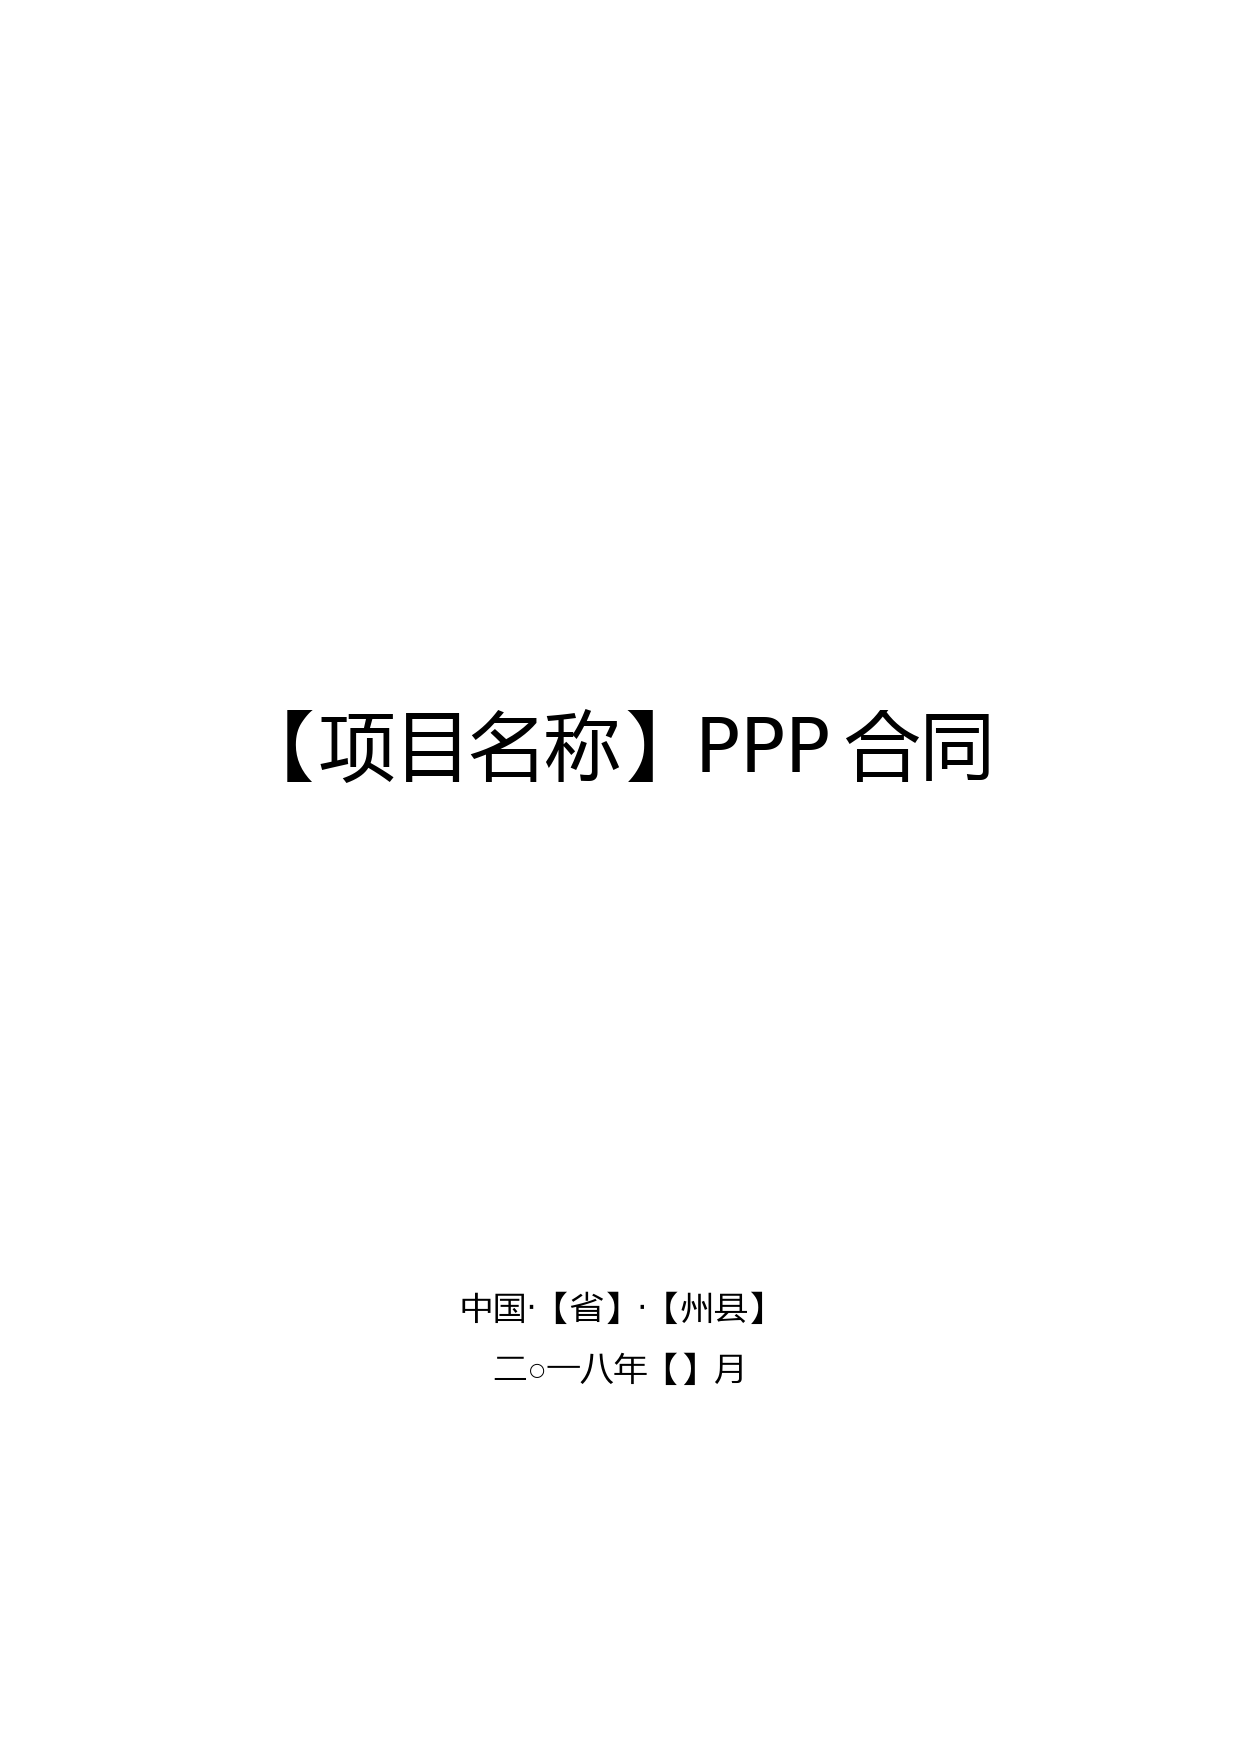 PPP项目合同模板